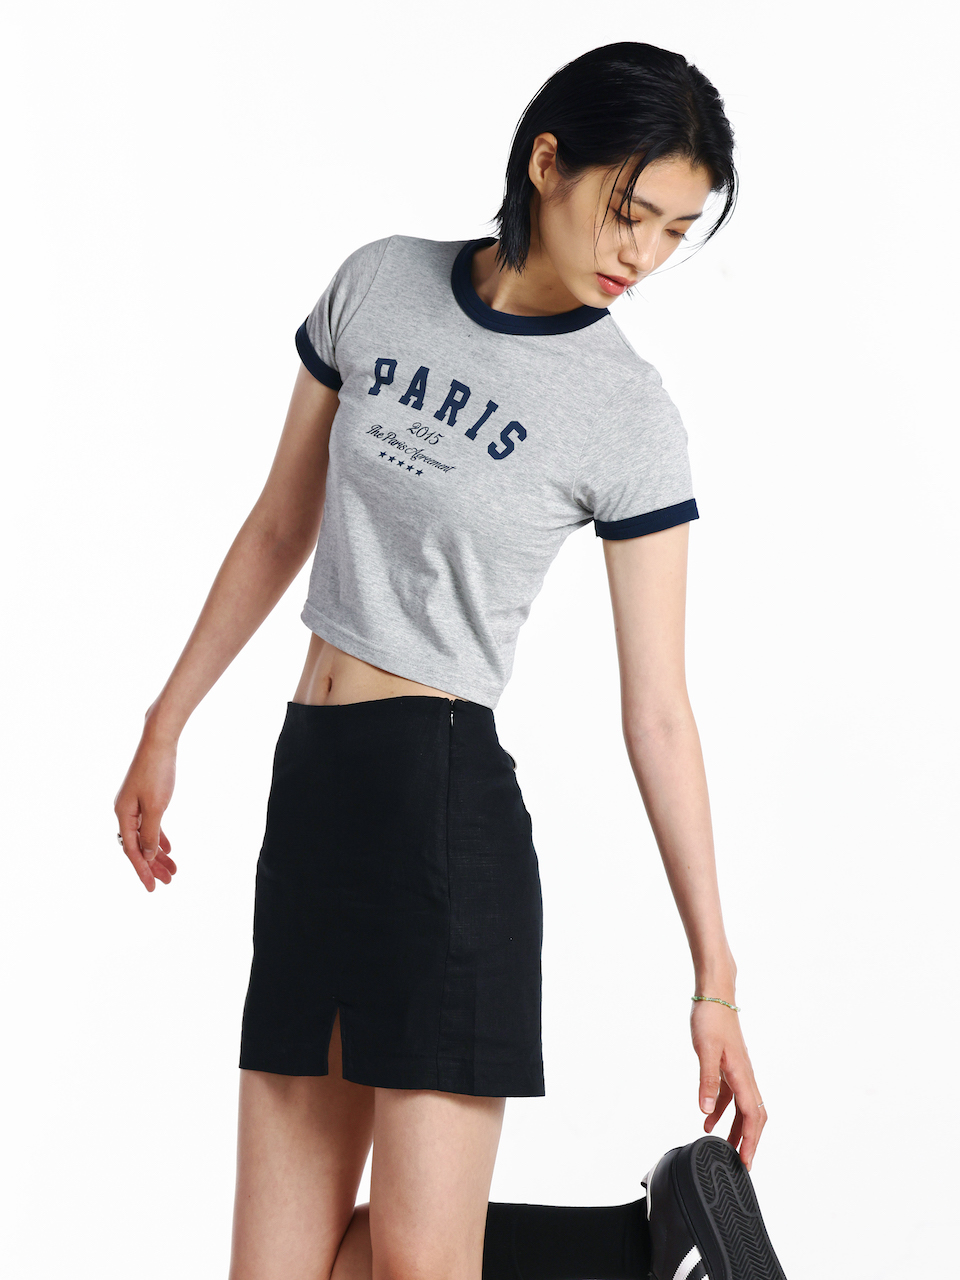 Paris typo Ringer Tight T-shirt heather gray